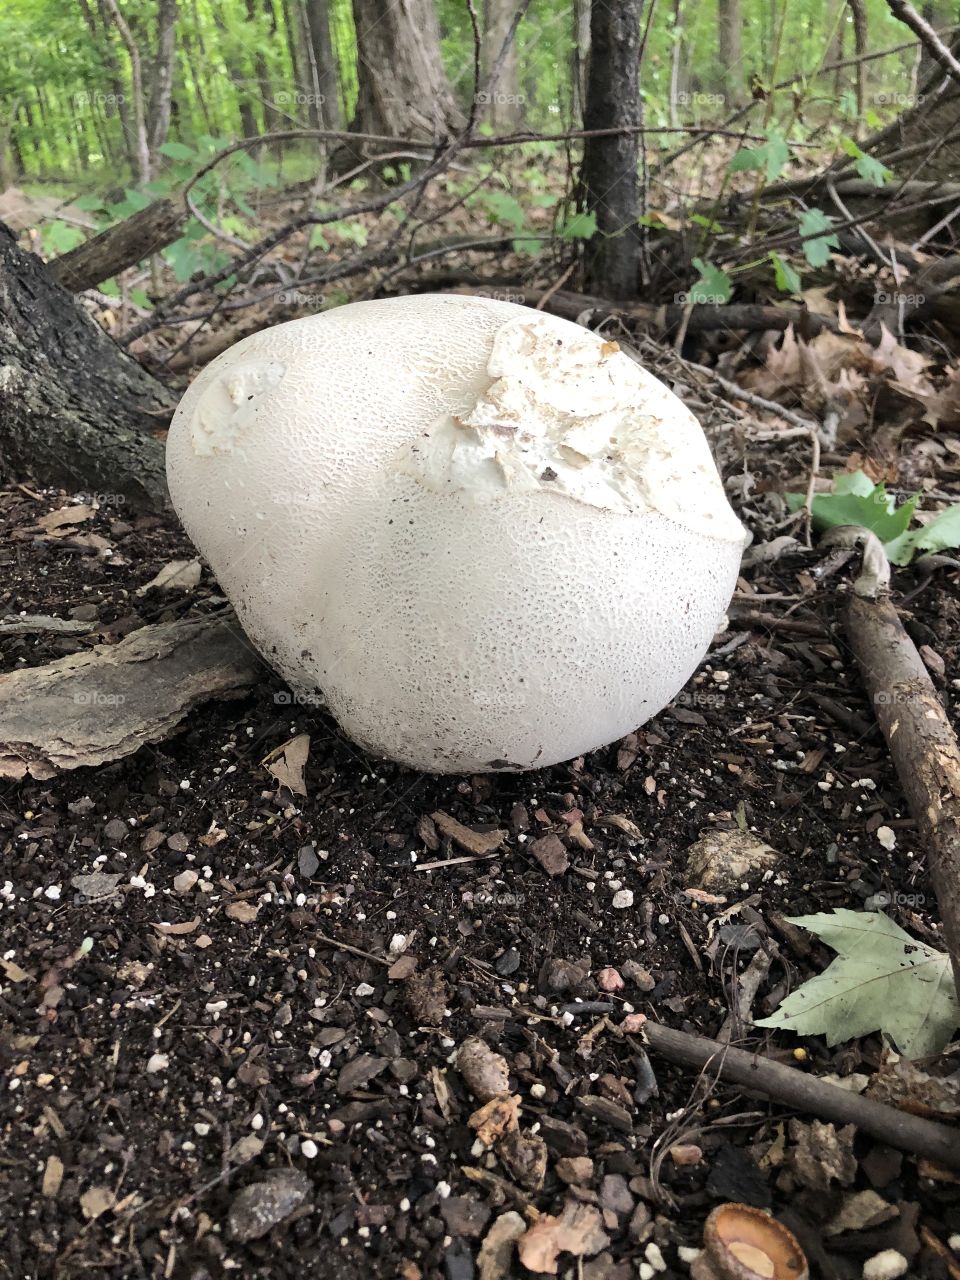 Giant Puffball Mushroom on the forest floor